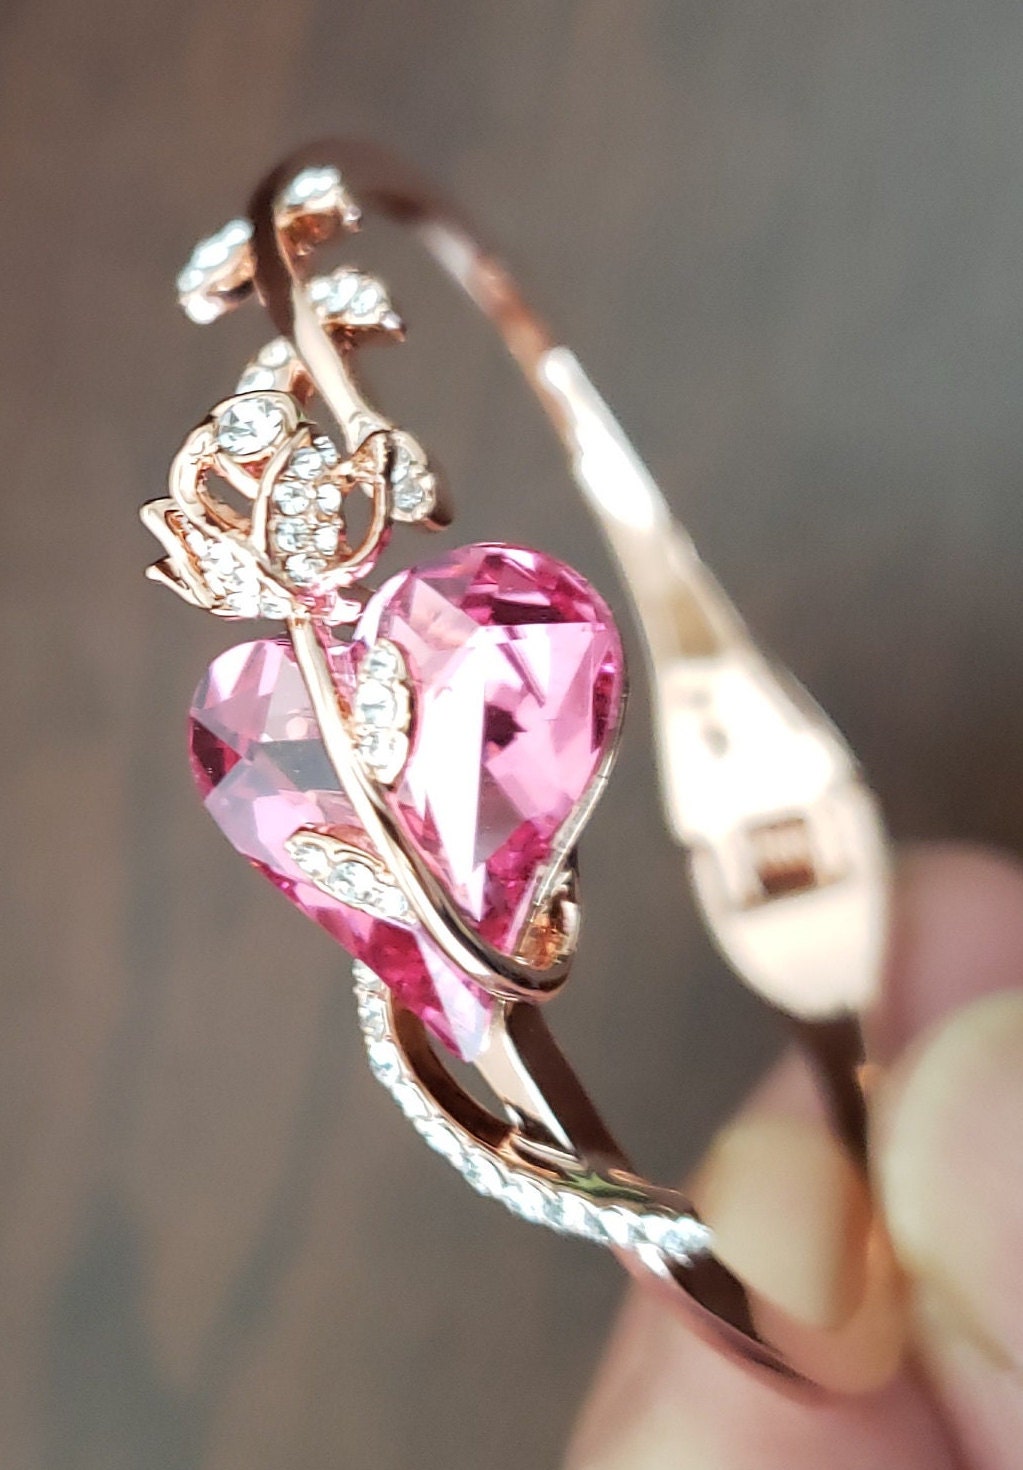 Sllaiss Swarovski Crystals Bangle Bracelets for Women Silver Tone Jewelry  for Women Girlfriend Wife Daughter Sister Friend on Valentine's Day  Birthday Anniversa…